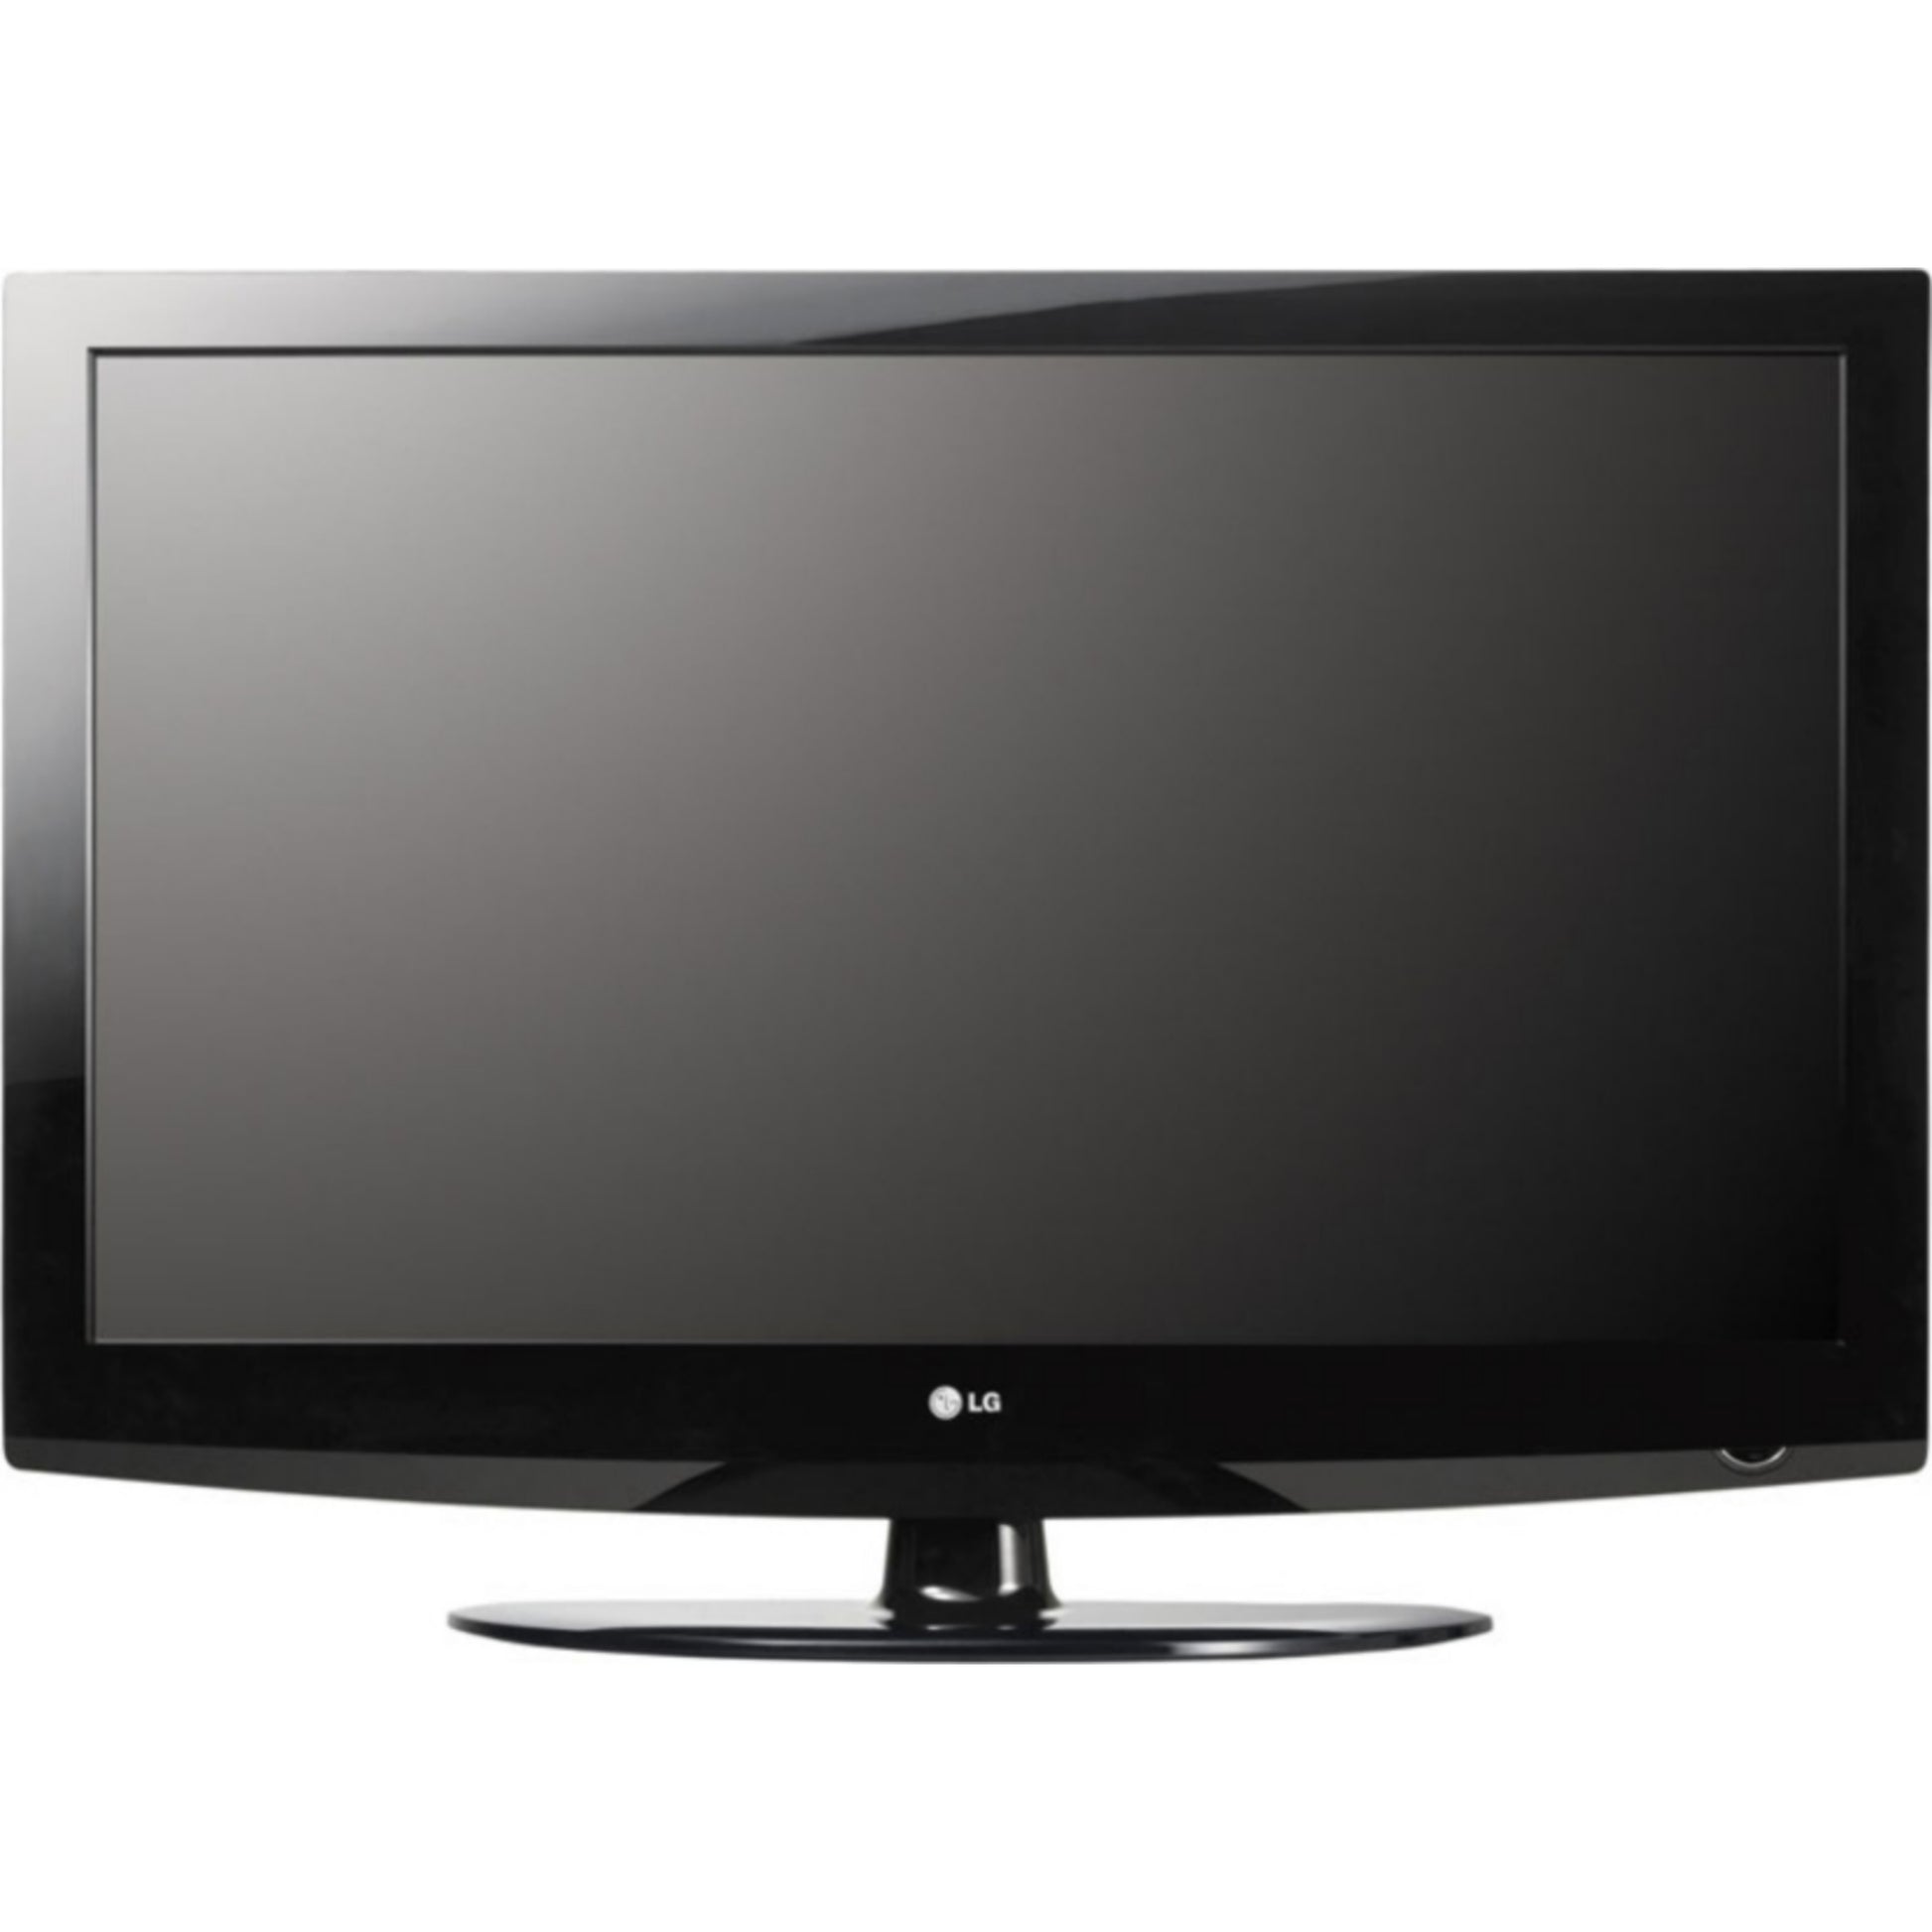  37 inch LG Full HD LCD TV - UK Used